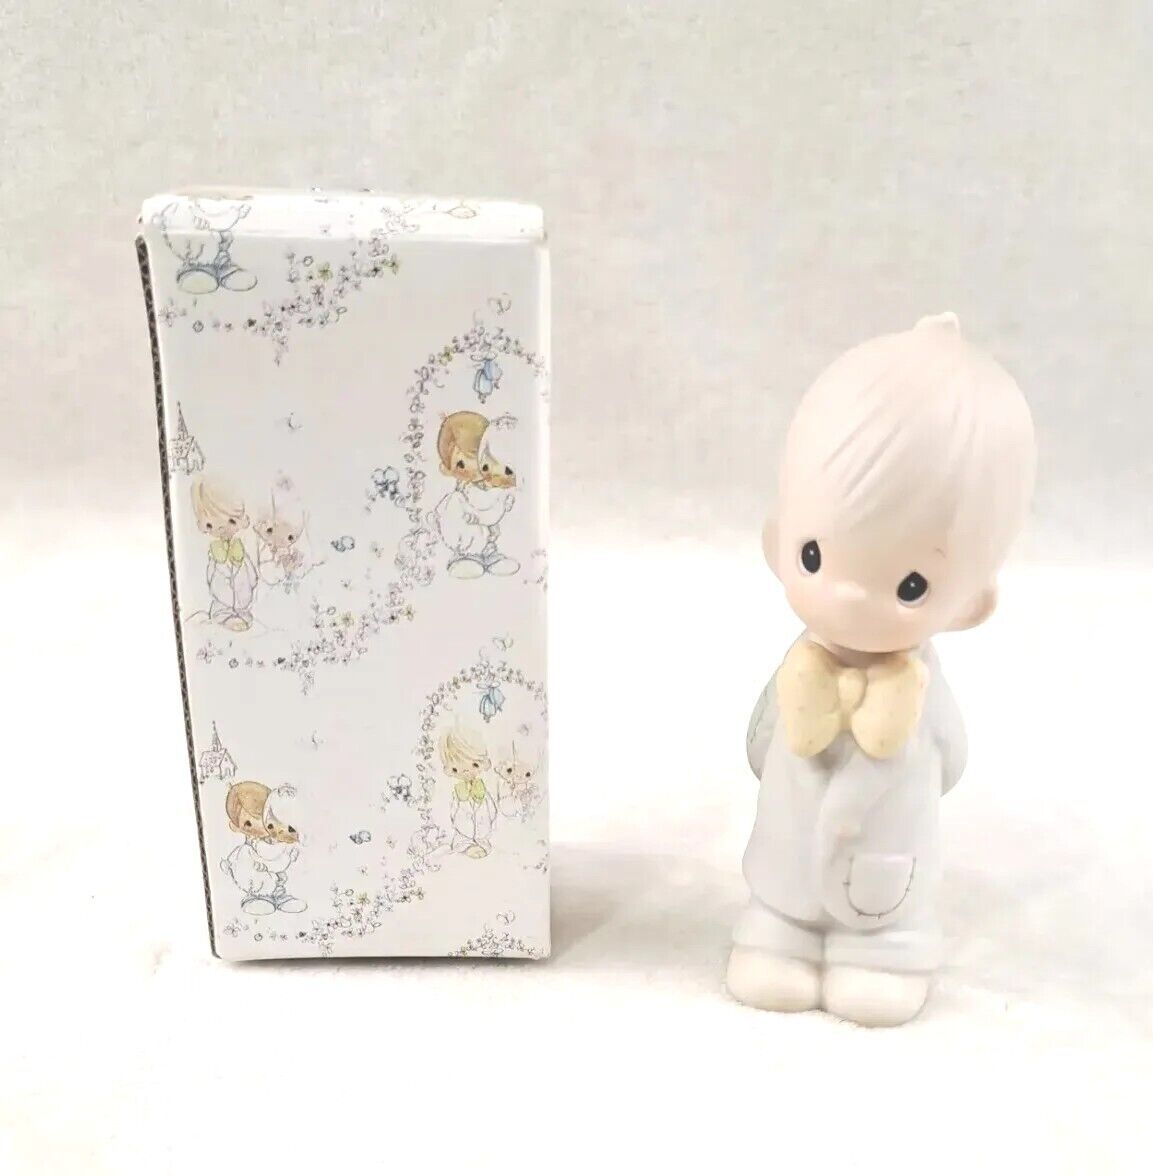 1983 Precious Moments figurine Groom Bridal Party Series Enesco E2837